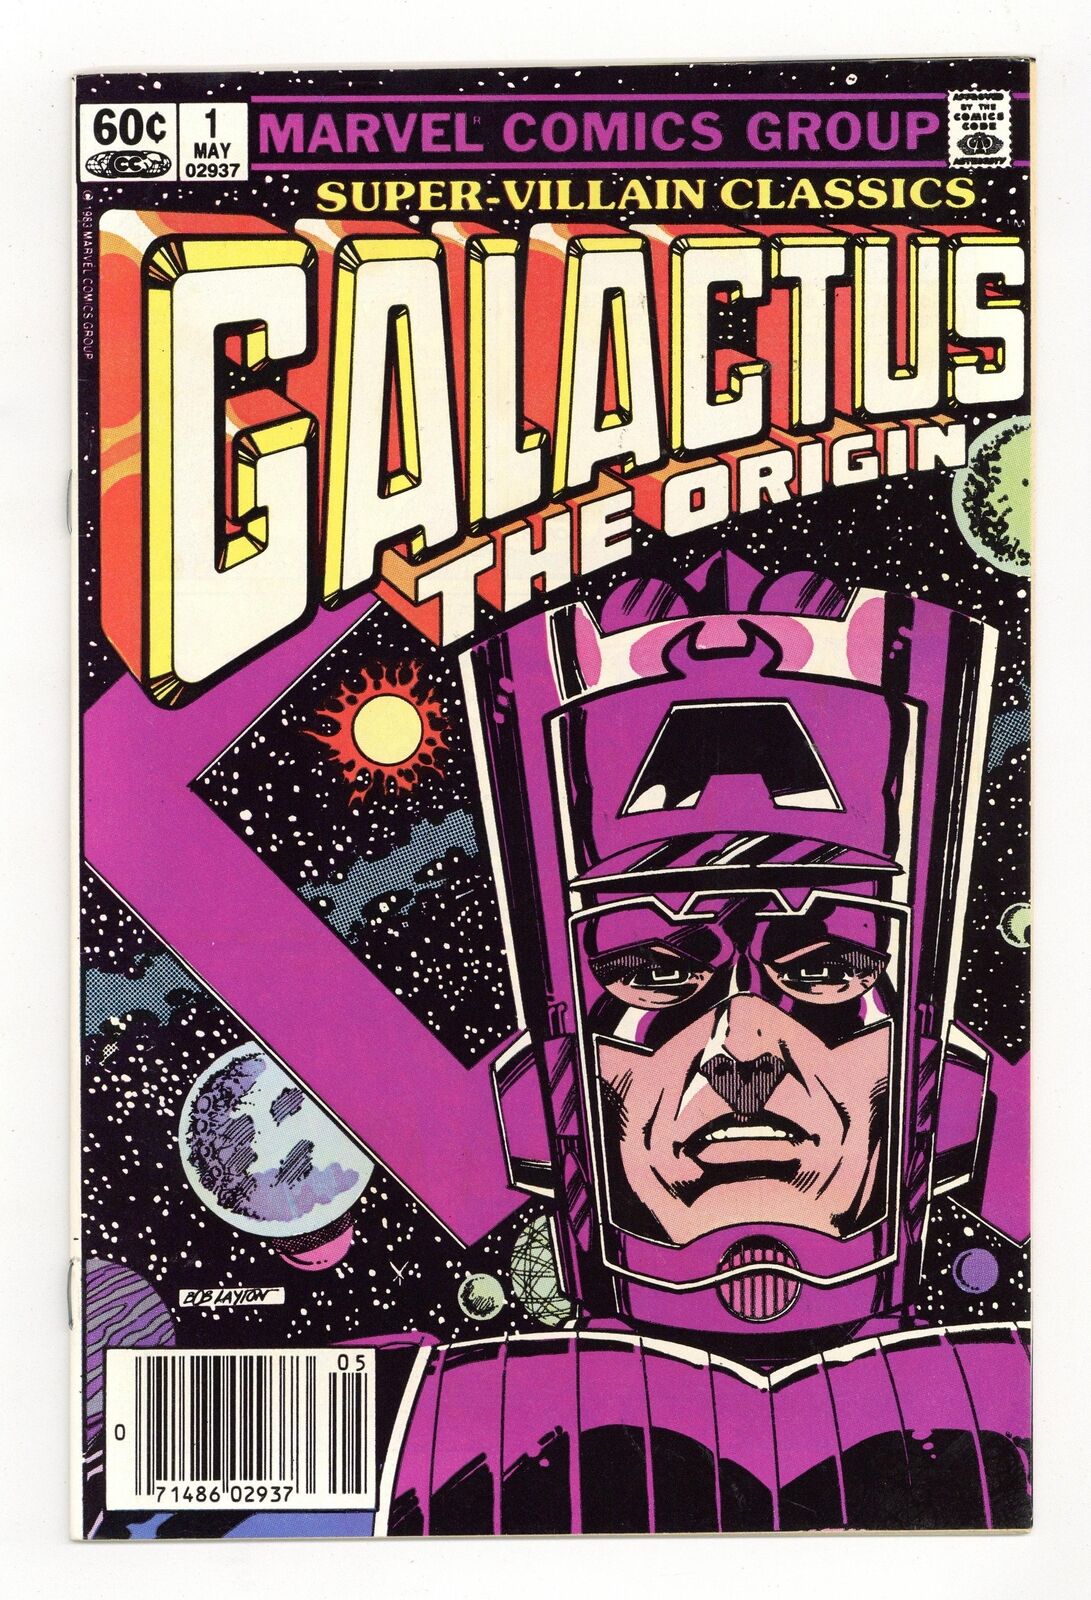 Super-Villain Classics Galactus the Origin #1 FN 6.0 1983